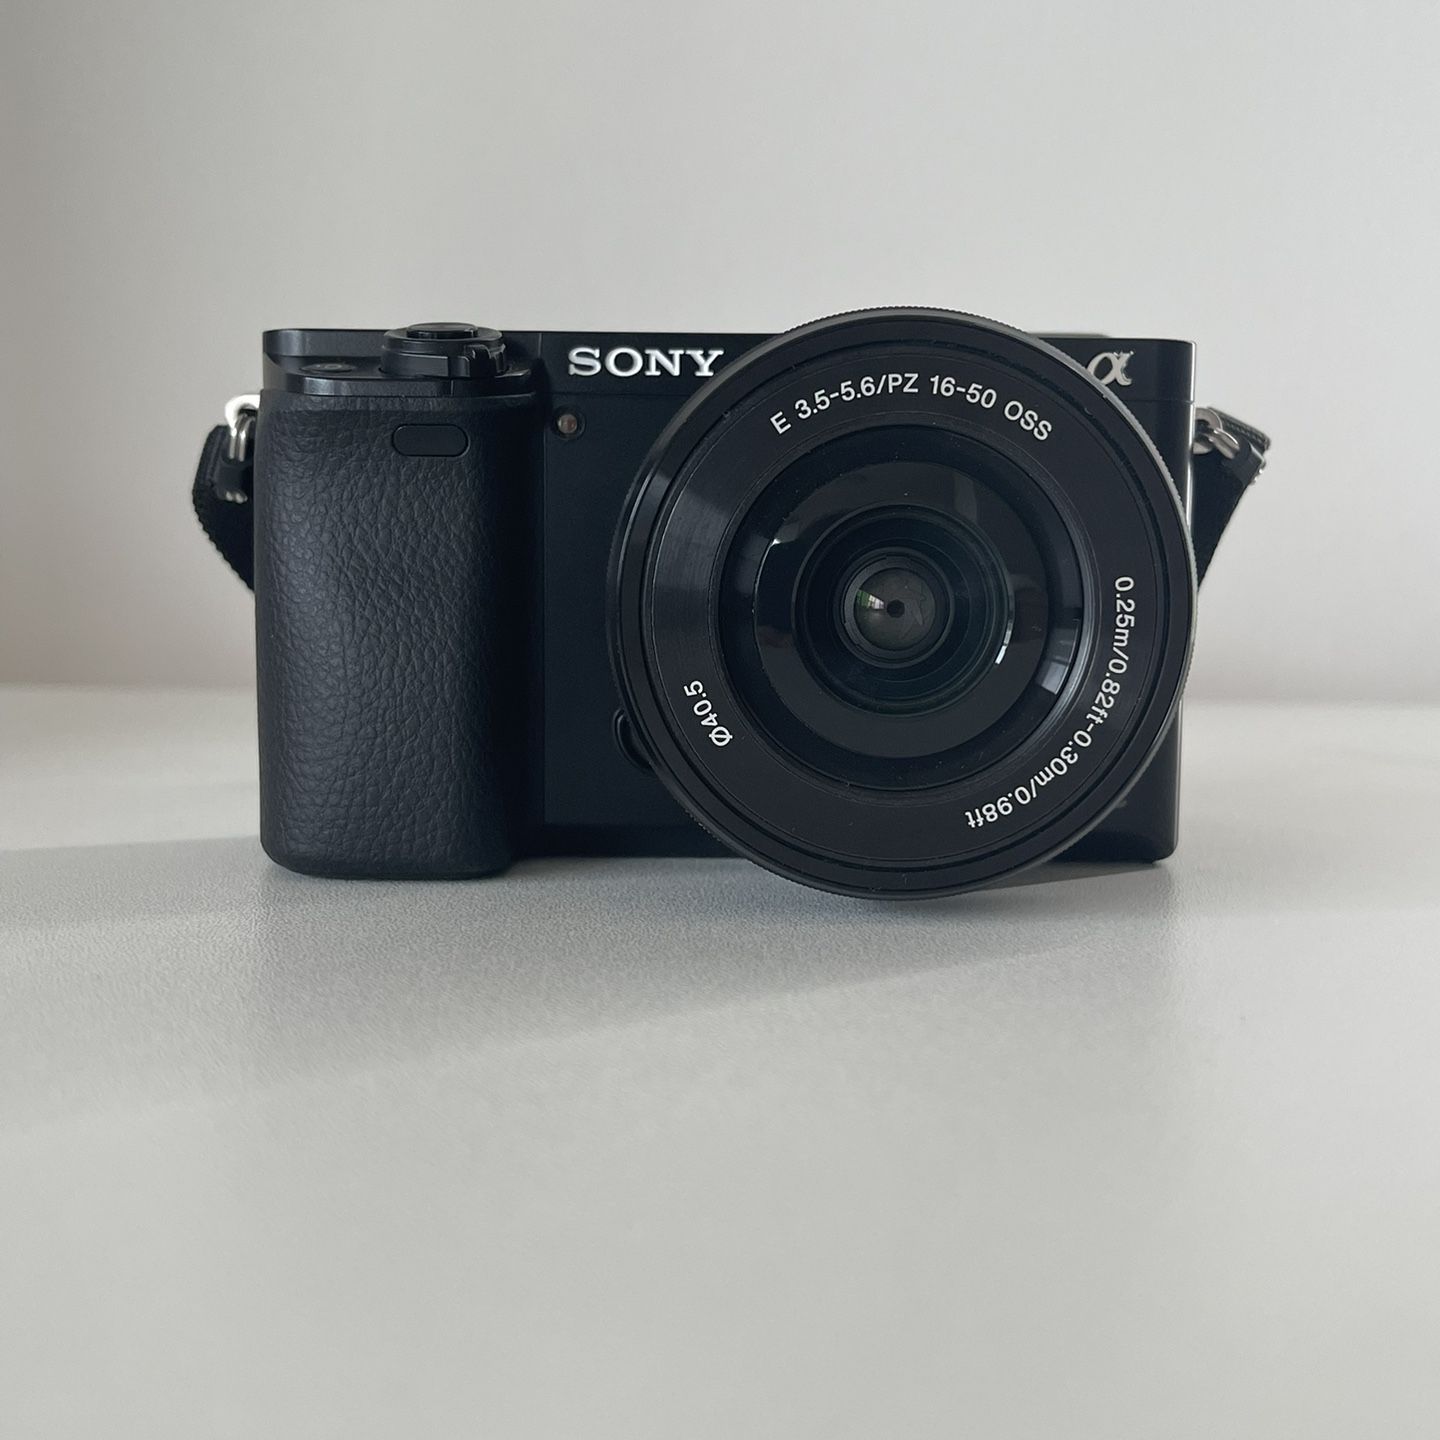 Sony Alpha a6000 Mirrorless Digital Camera 24.3MP SLR Camera with 3.0-Inch  LCD (Black) w/16-50mm Power Zoom Lens